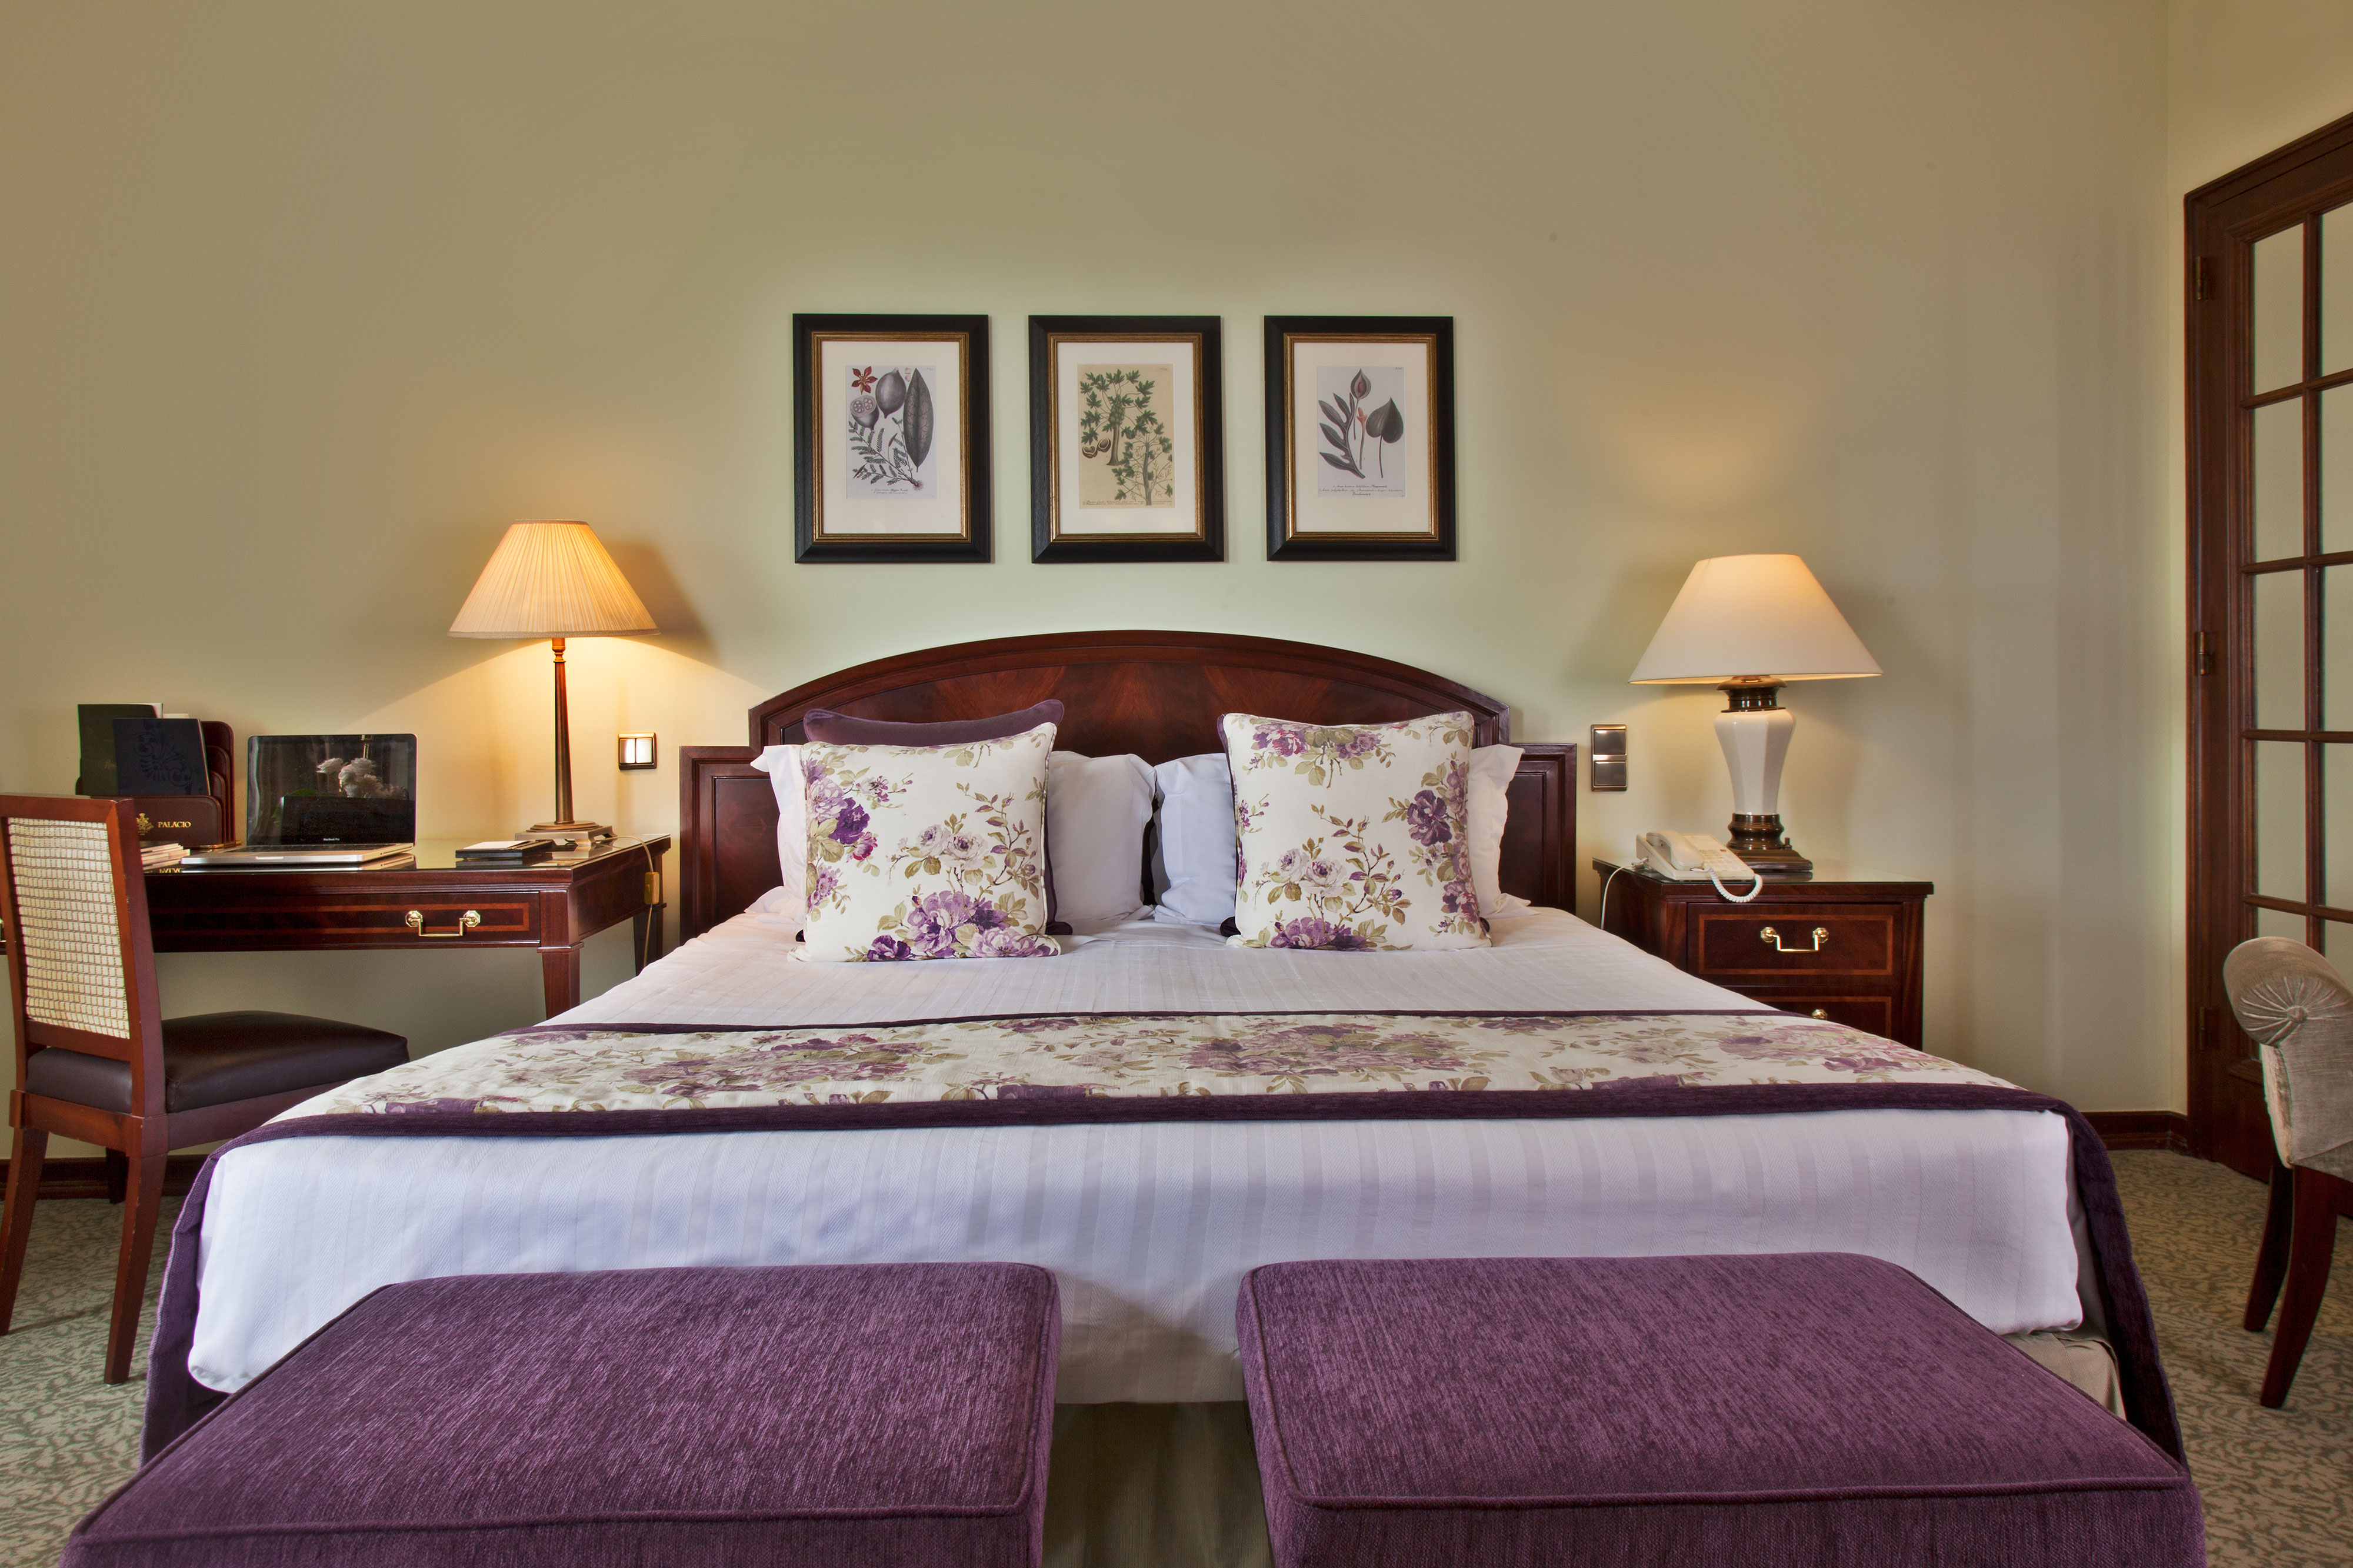 Golf-expedition-golfreizen-golfresort-Palacio-Estoril-Hotel-Golf-And-Spa-appartement-bedroom-2